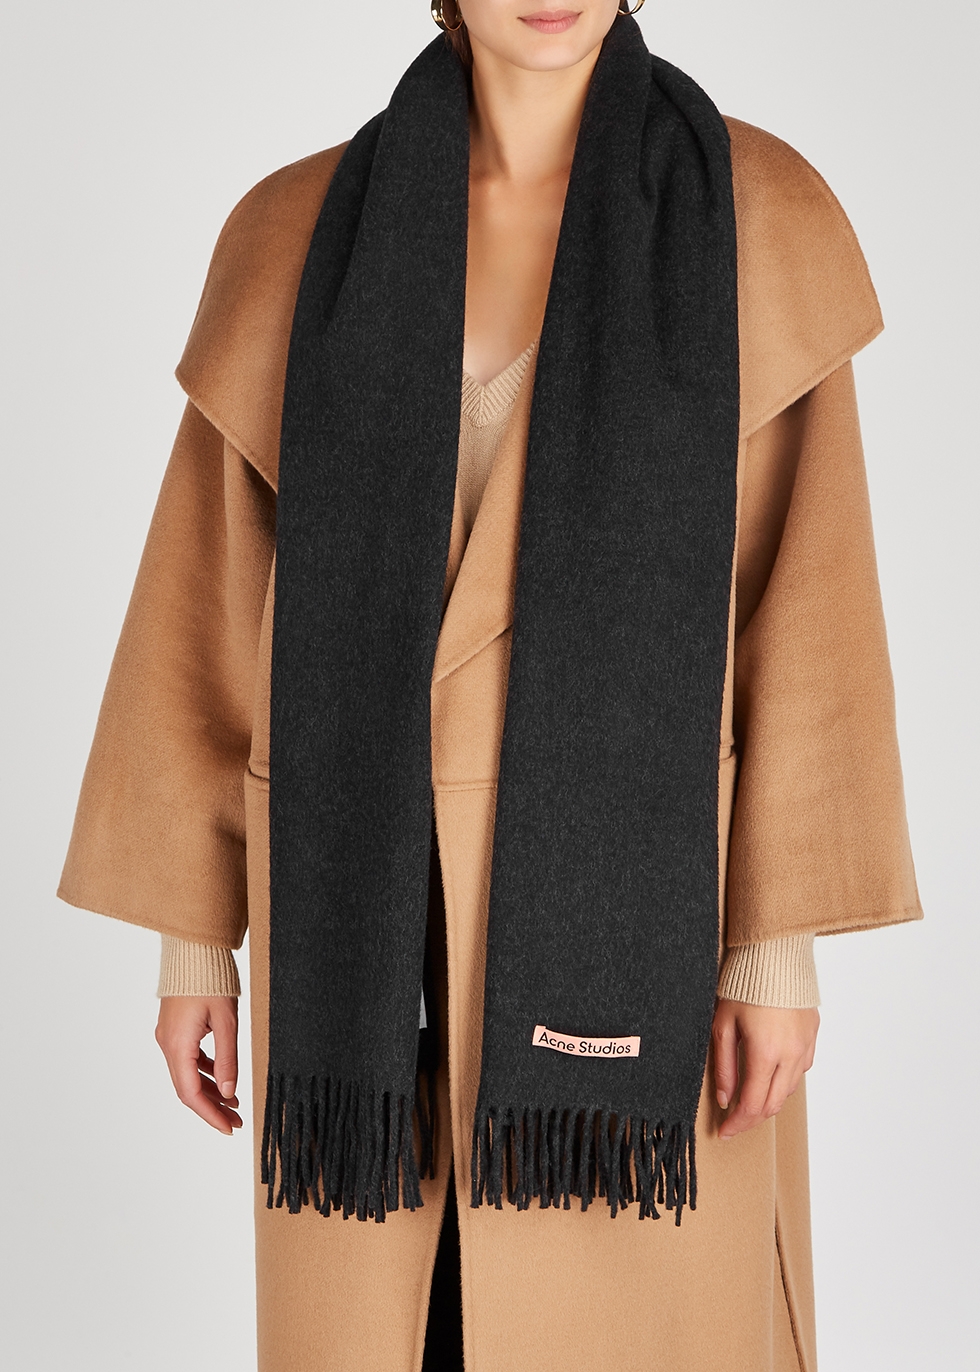 Acne Studios Canada anthracite wool scarf - Harvey Nichols